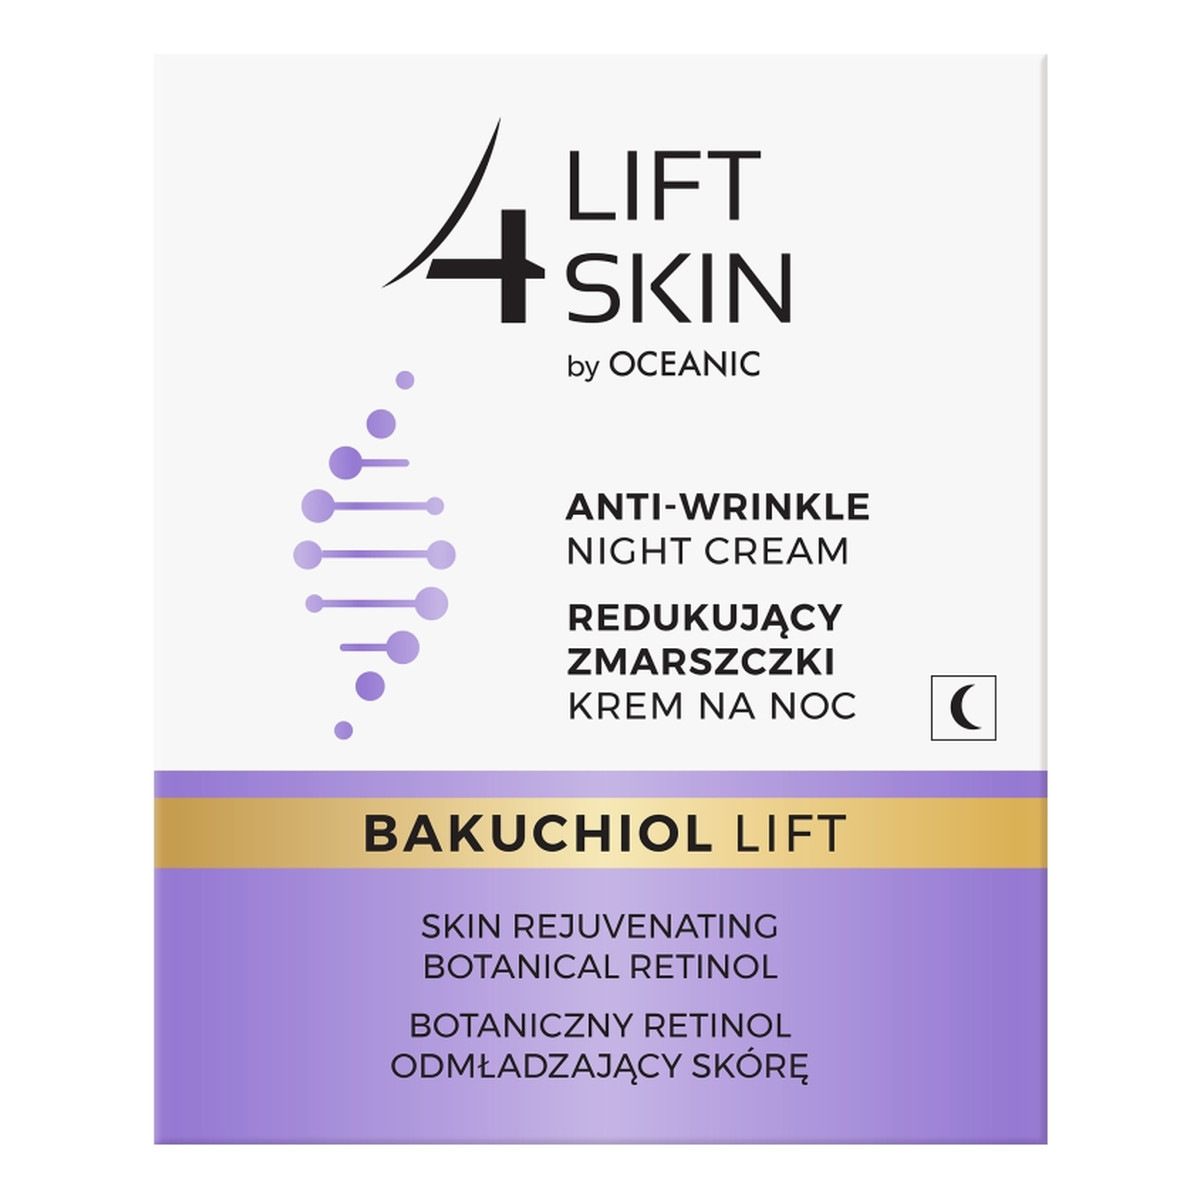 Lift 4 Skin Bakuchiol Lift redukujący zmarszczki krem na noc Botaniczny Retinol 50ml